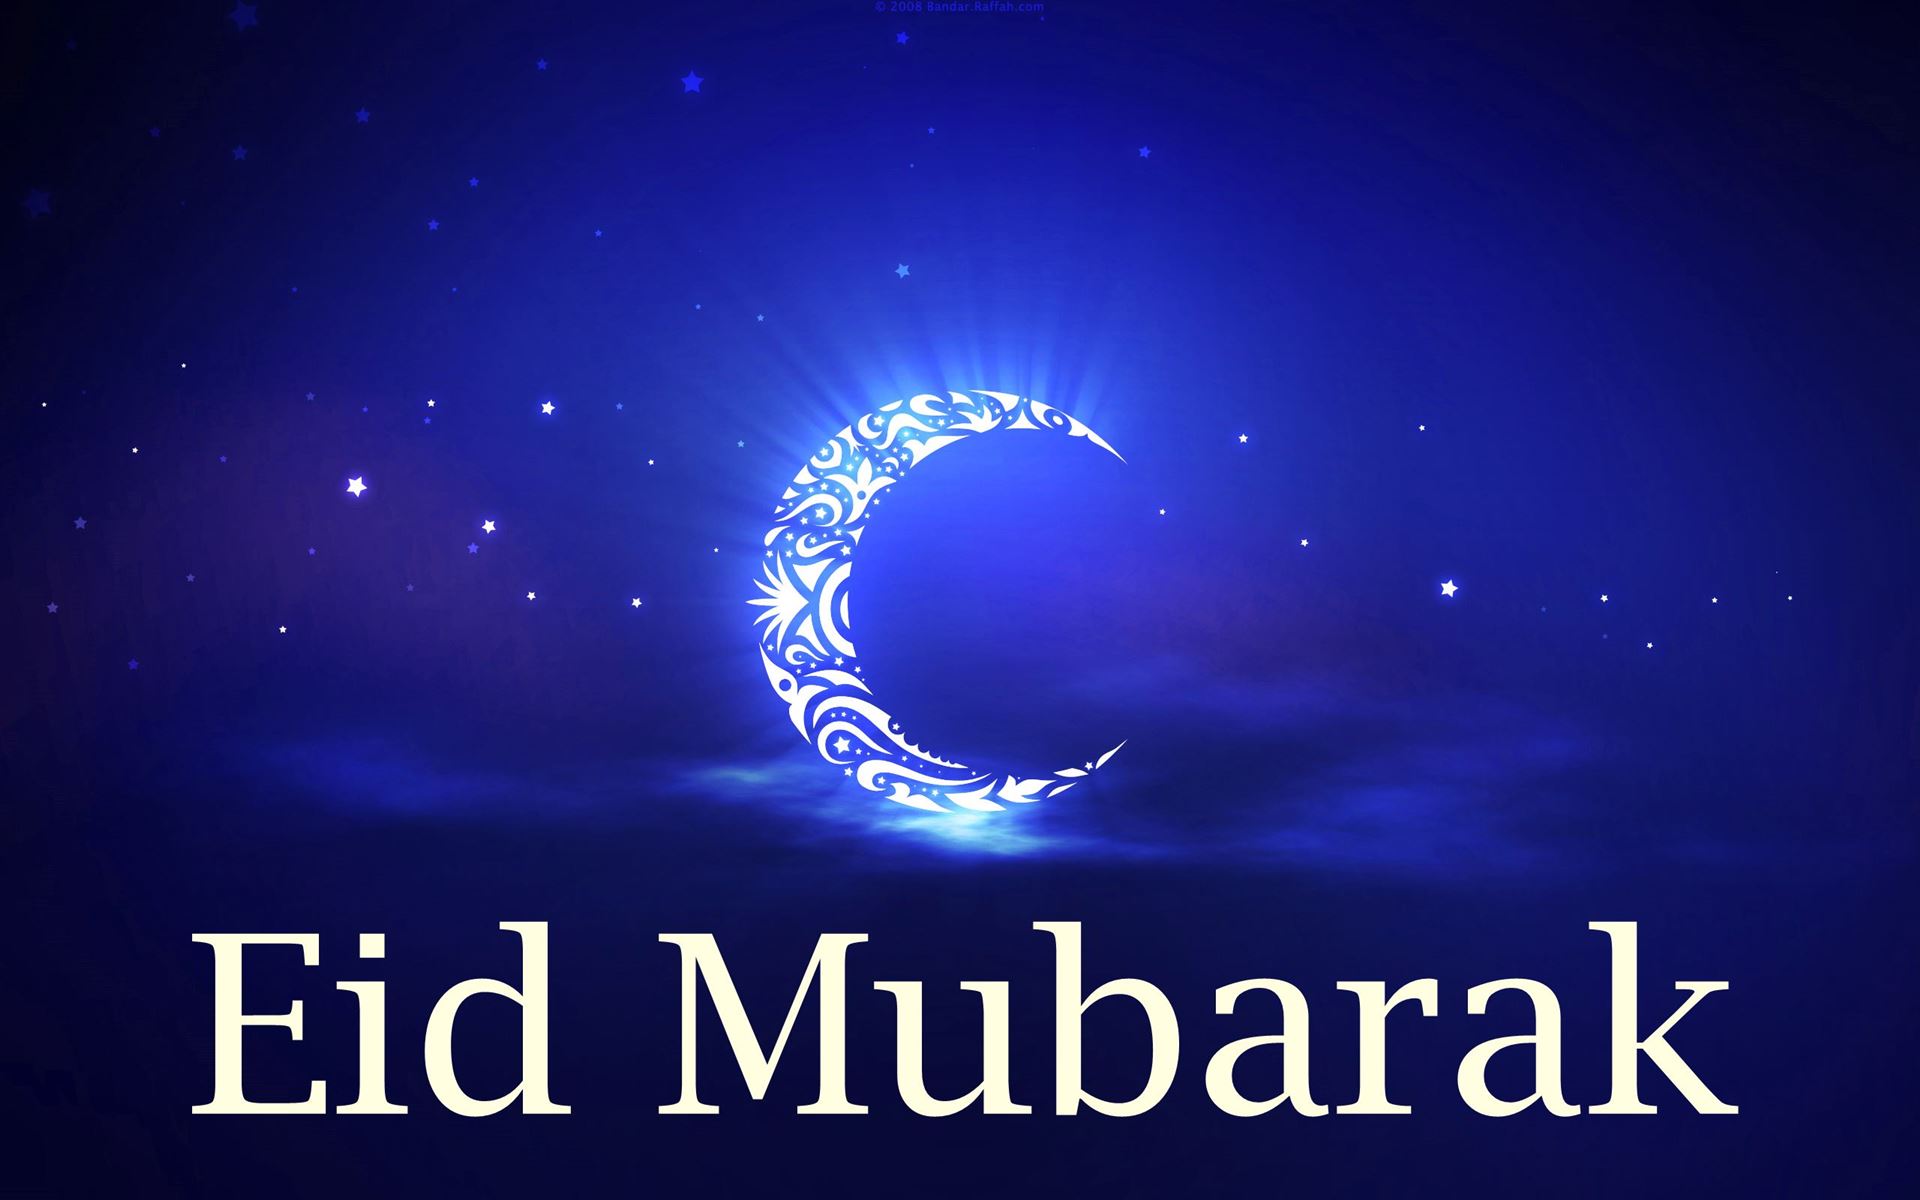 SF Wishes Eid Mubarak To Muslims Worldwide